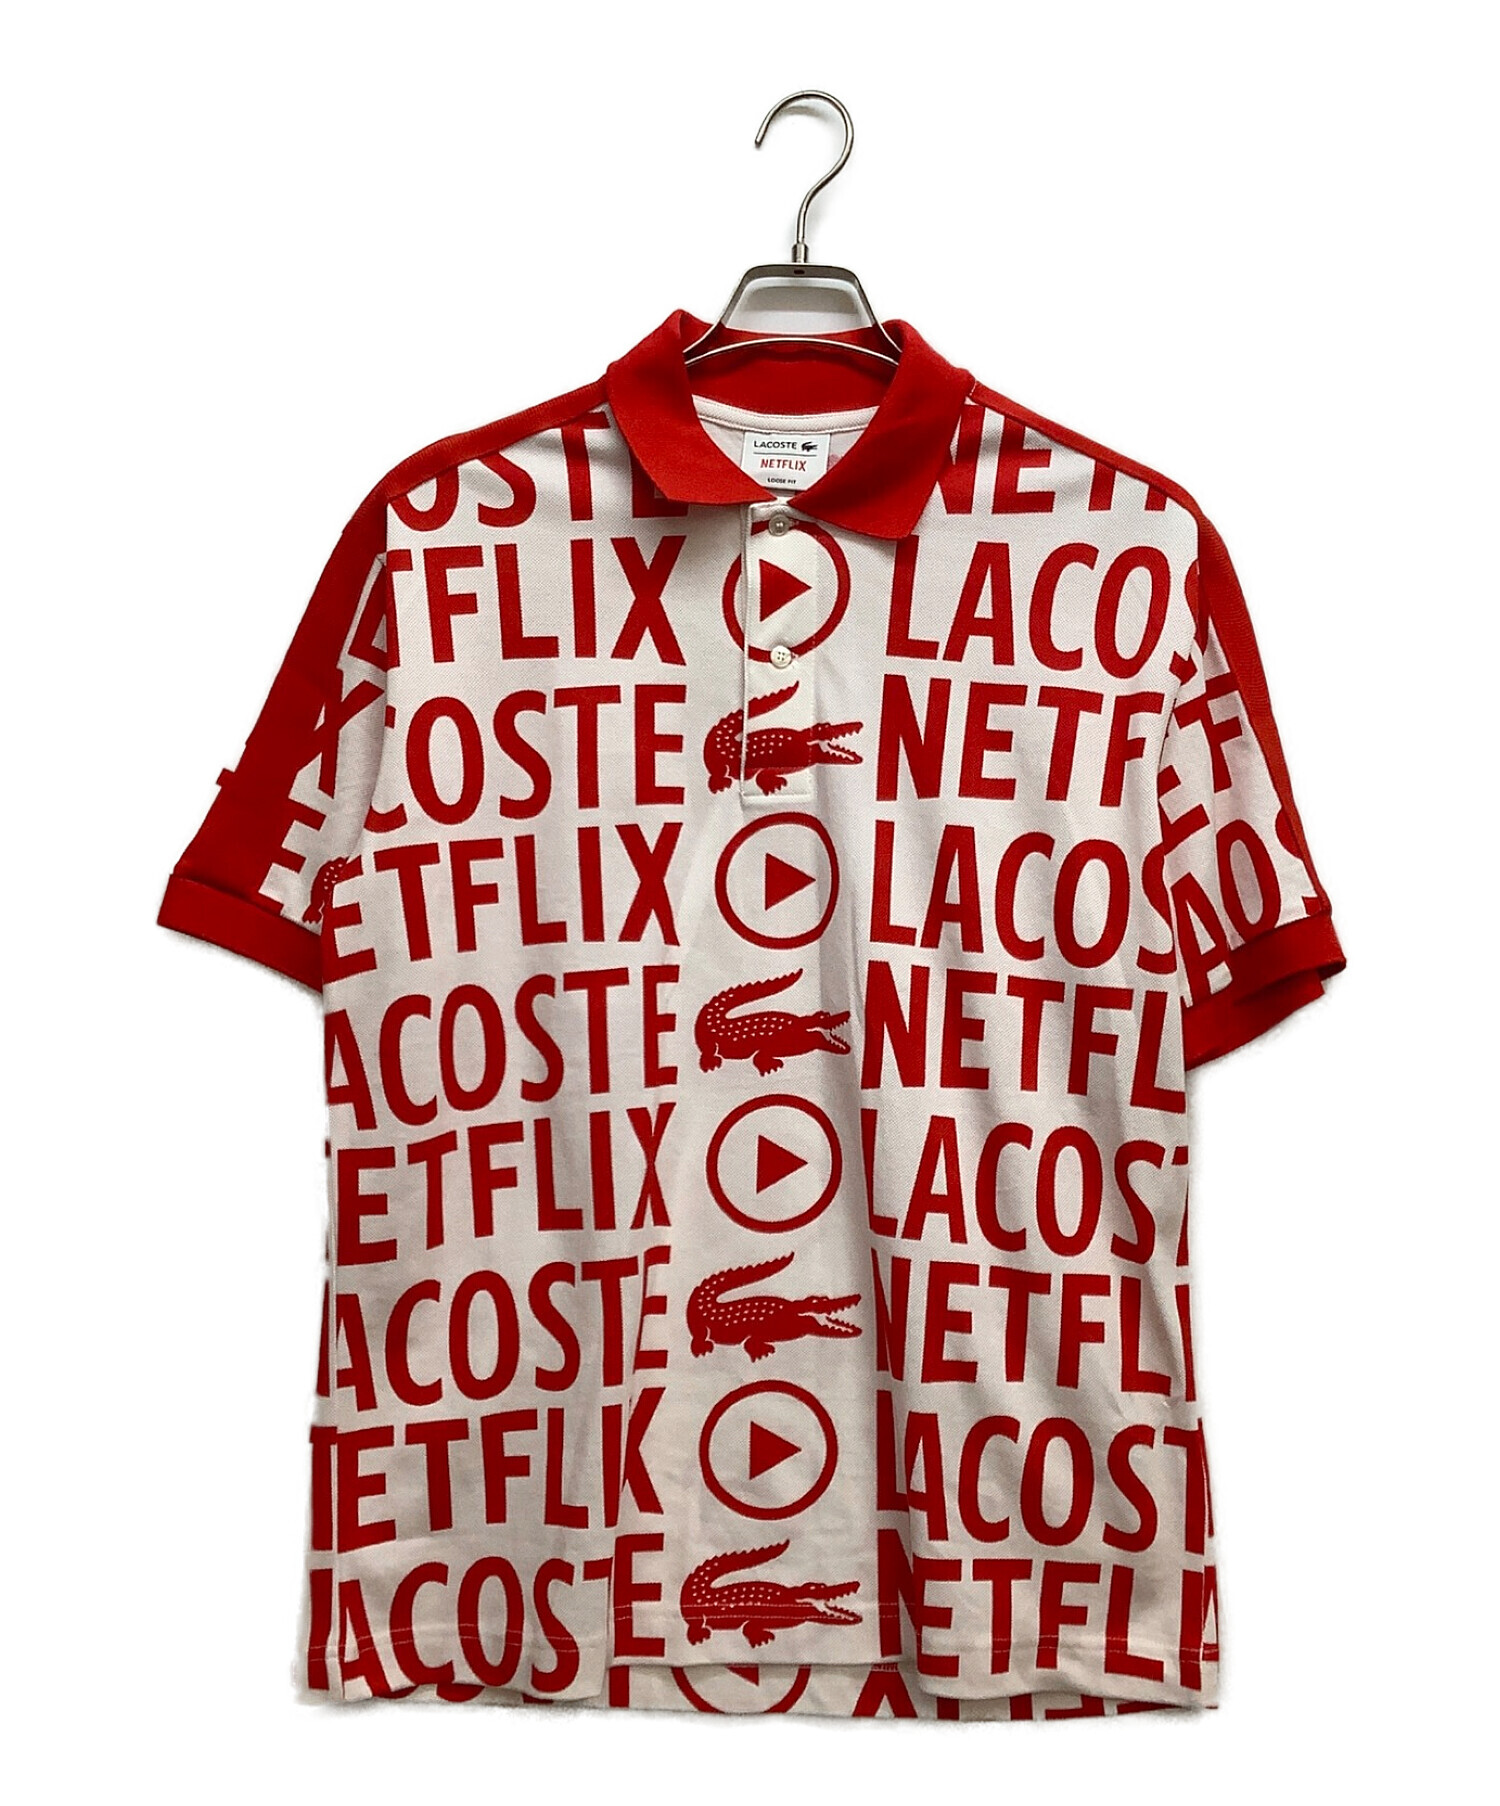 LACOSTE (ラコステ) NETFILIX (ネットフリックス) 『Lacoste x Netflix』 オーバーサイズ総柄ポロシャツ レッド  サイズ:3